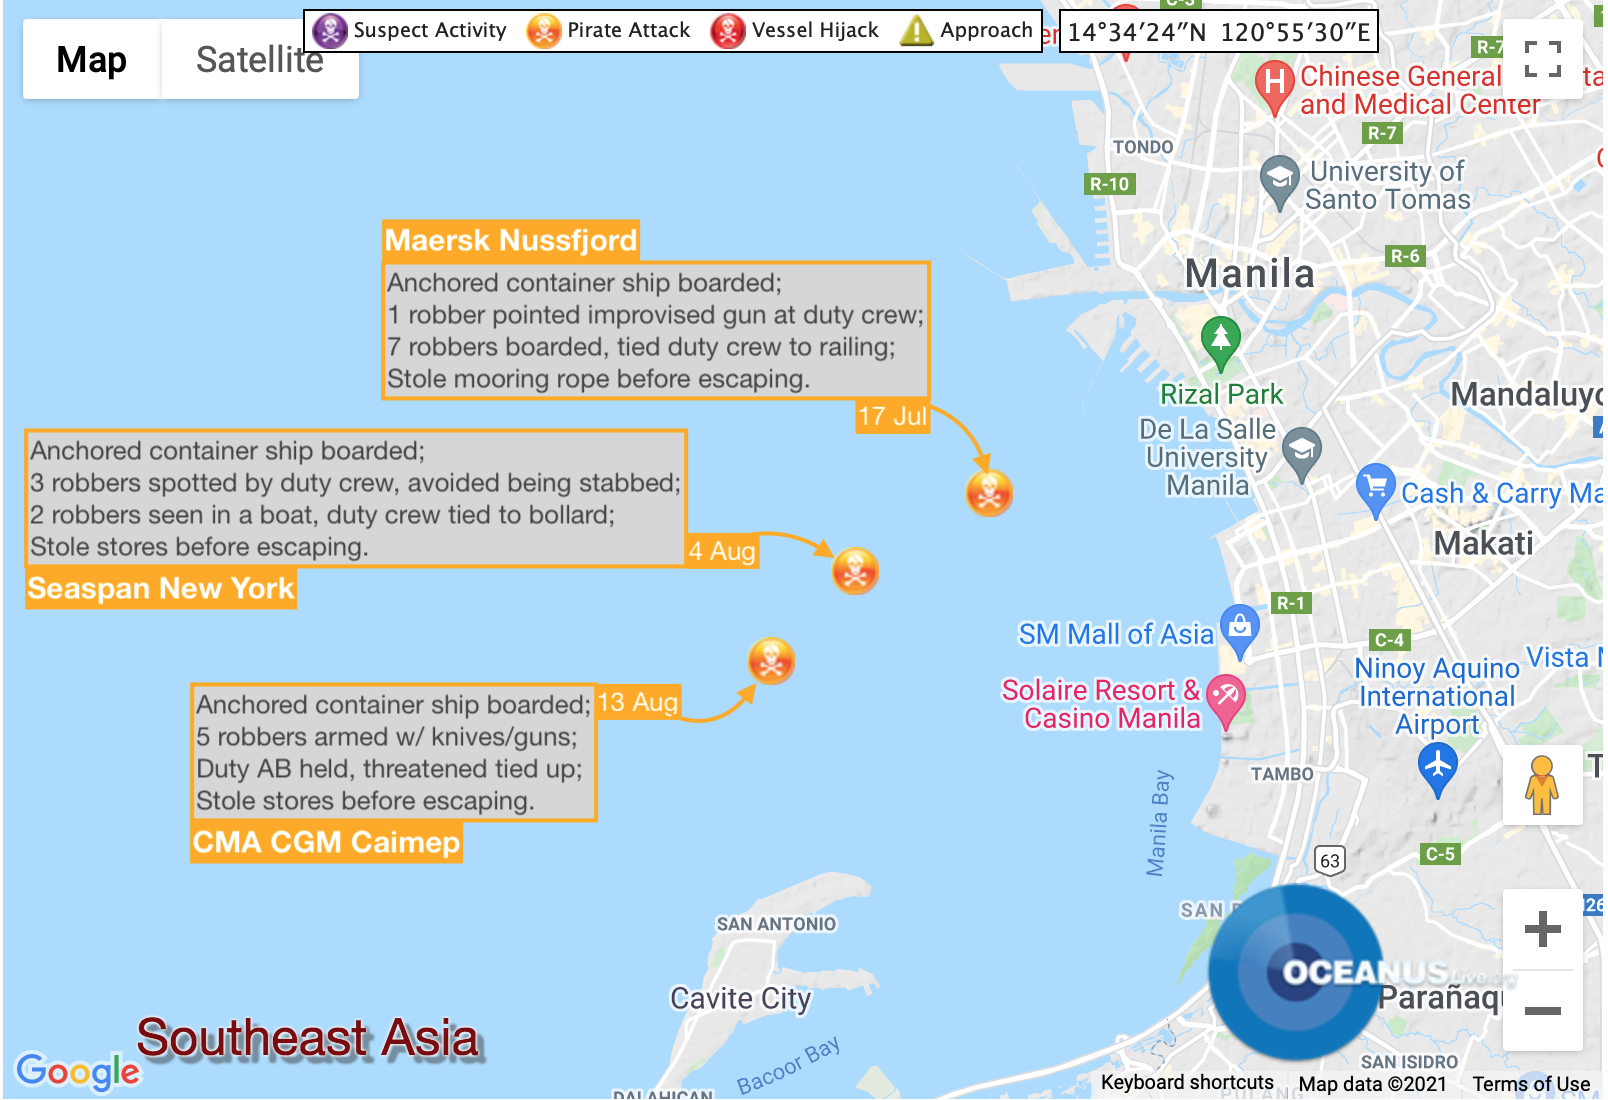 Manila Anchorage Incidents Image: OCEANUSLive